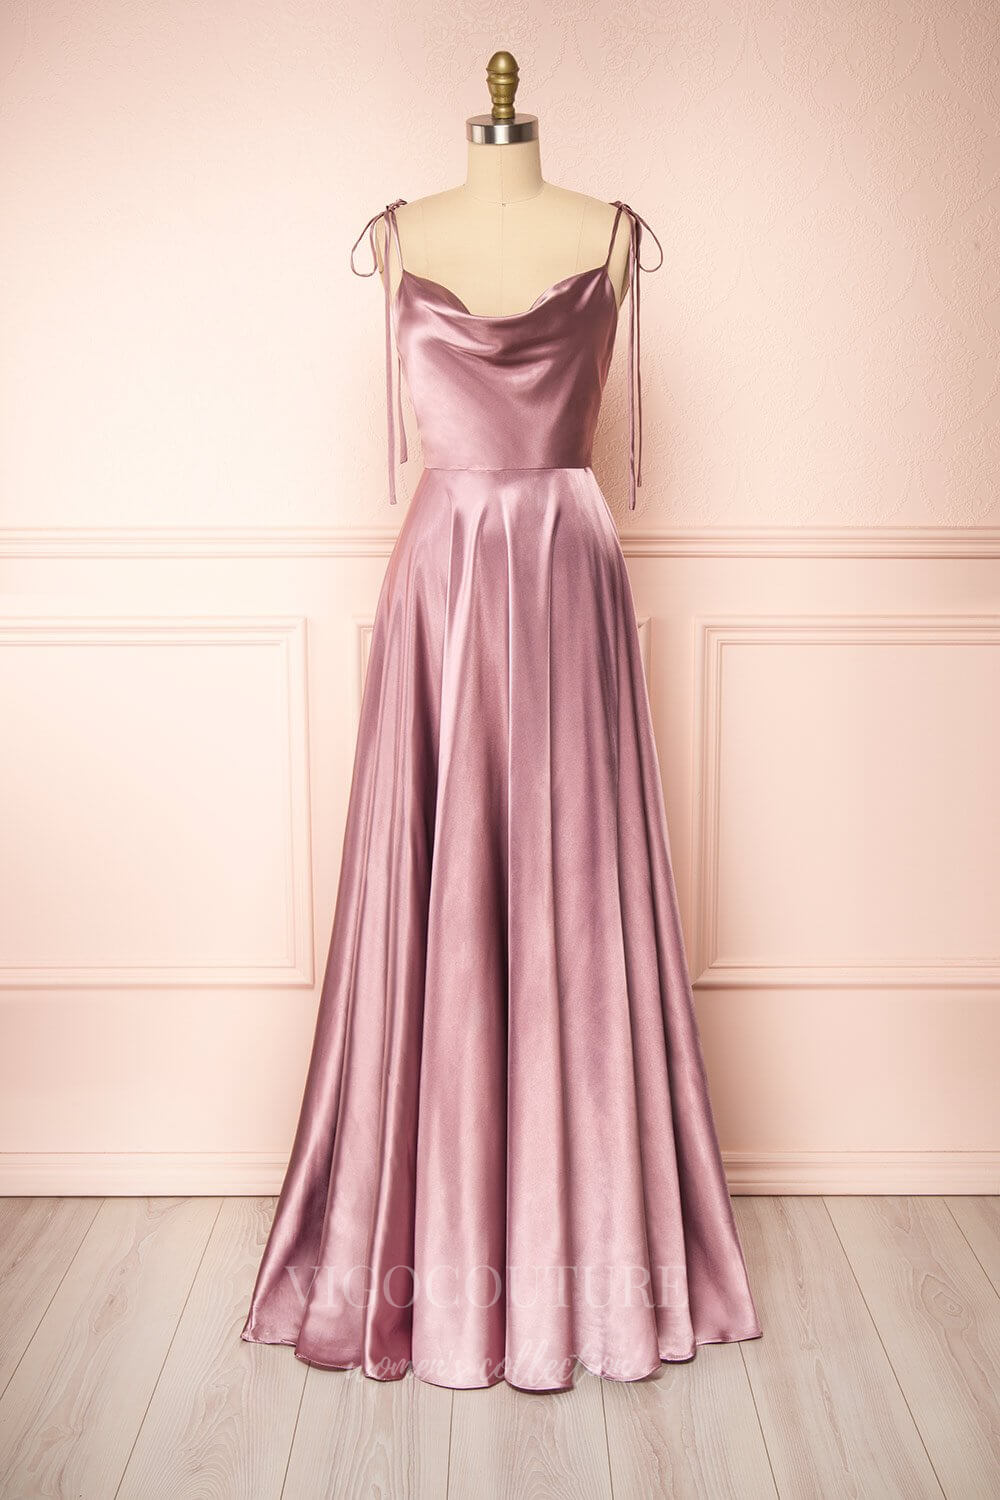 vigocouture-Burgundy Spaghetti Strap Prom Dress 20576-Prom Dresses-vigocouture-Dusty Pink-US2-